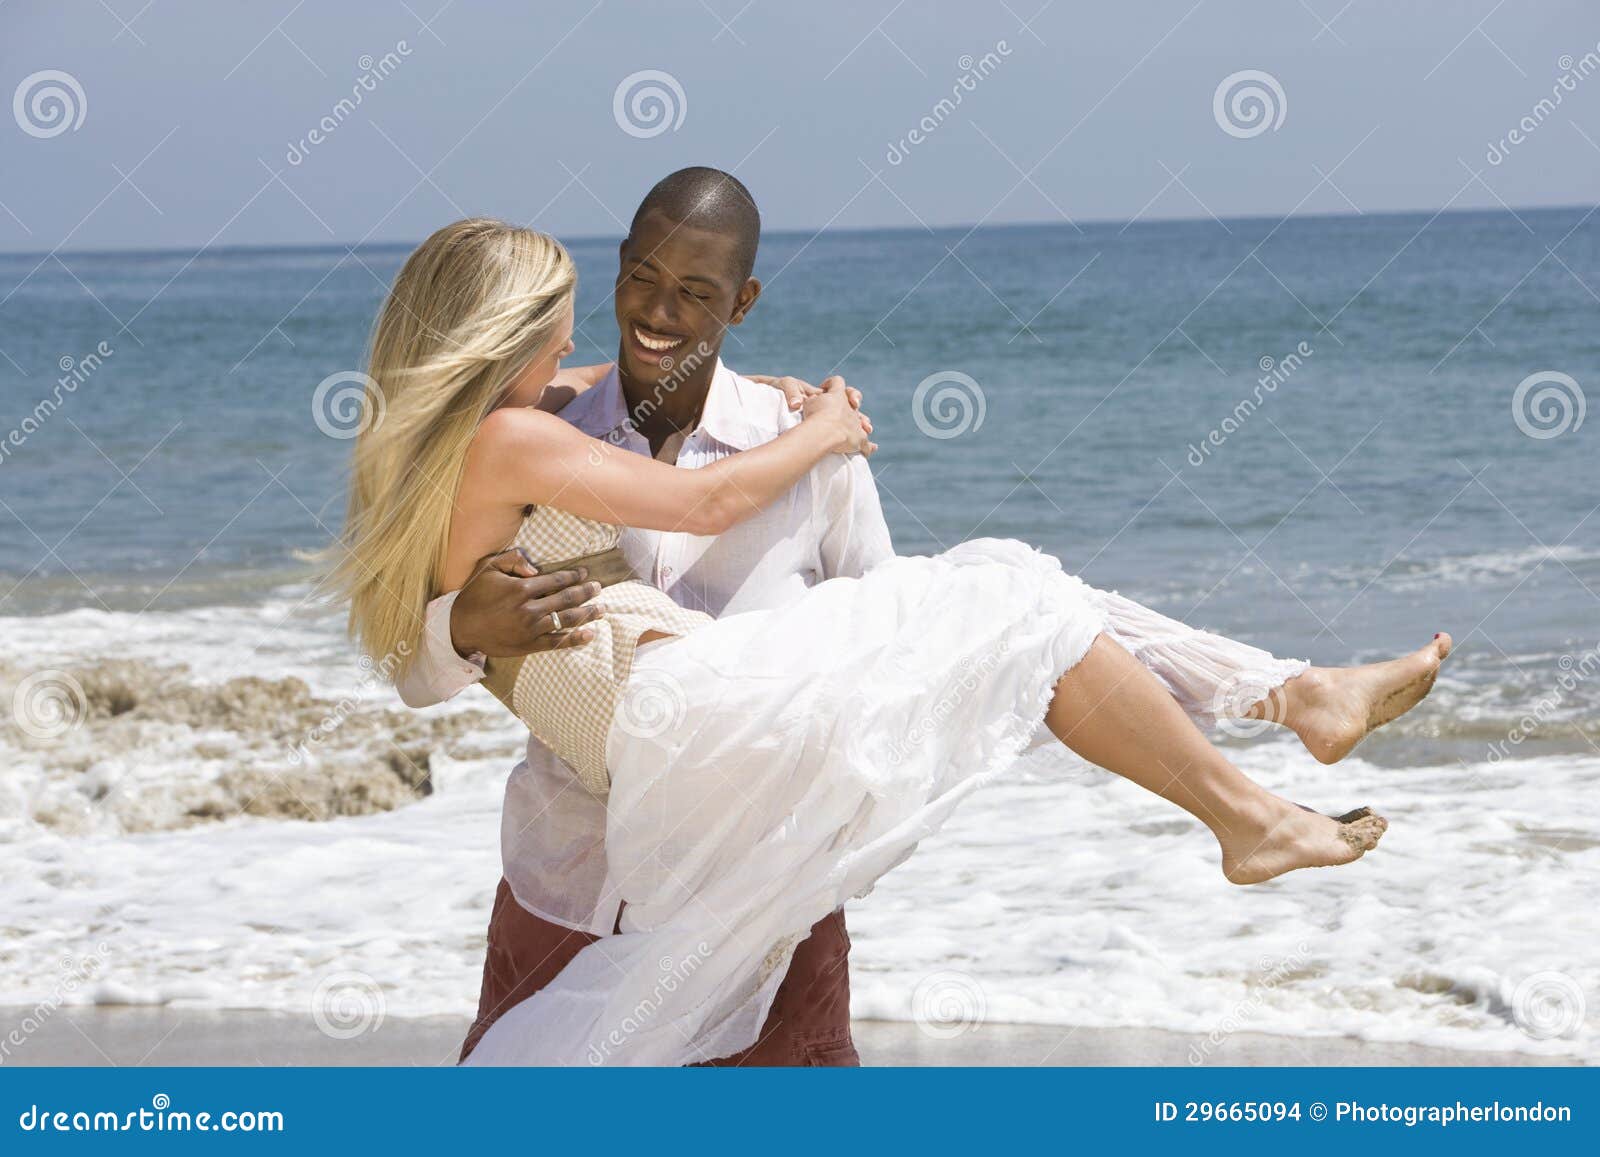 man-carrying-woman-beach-29665094.jpg